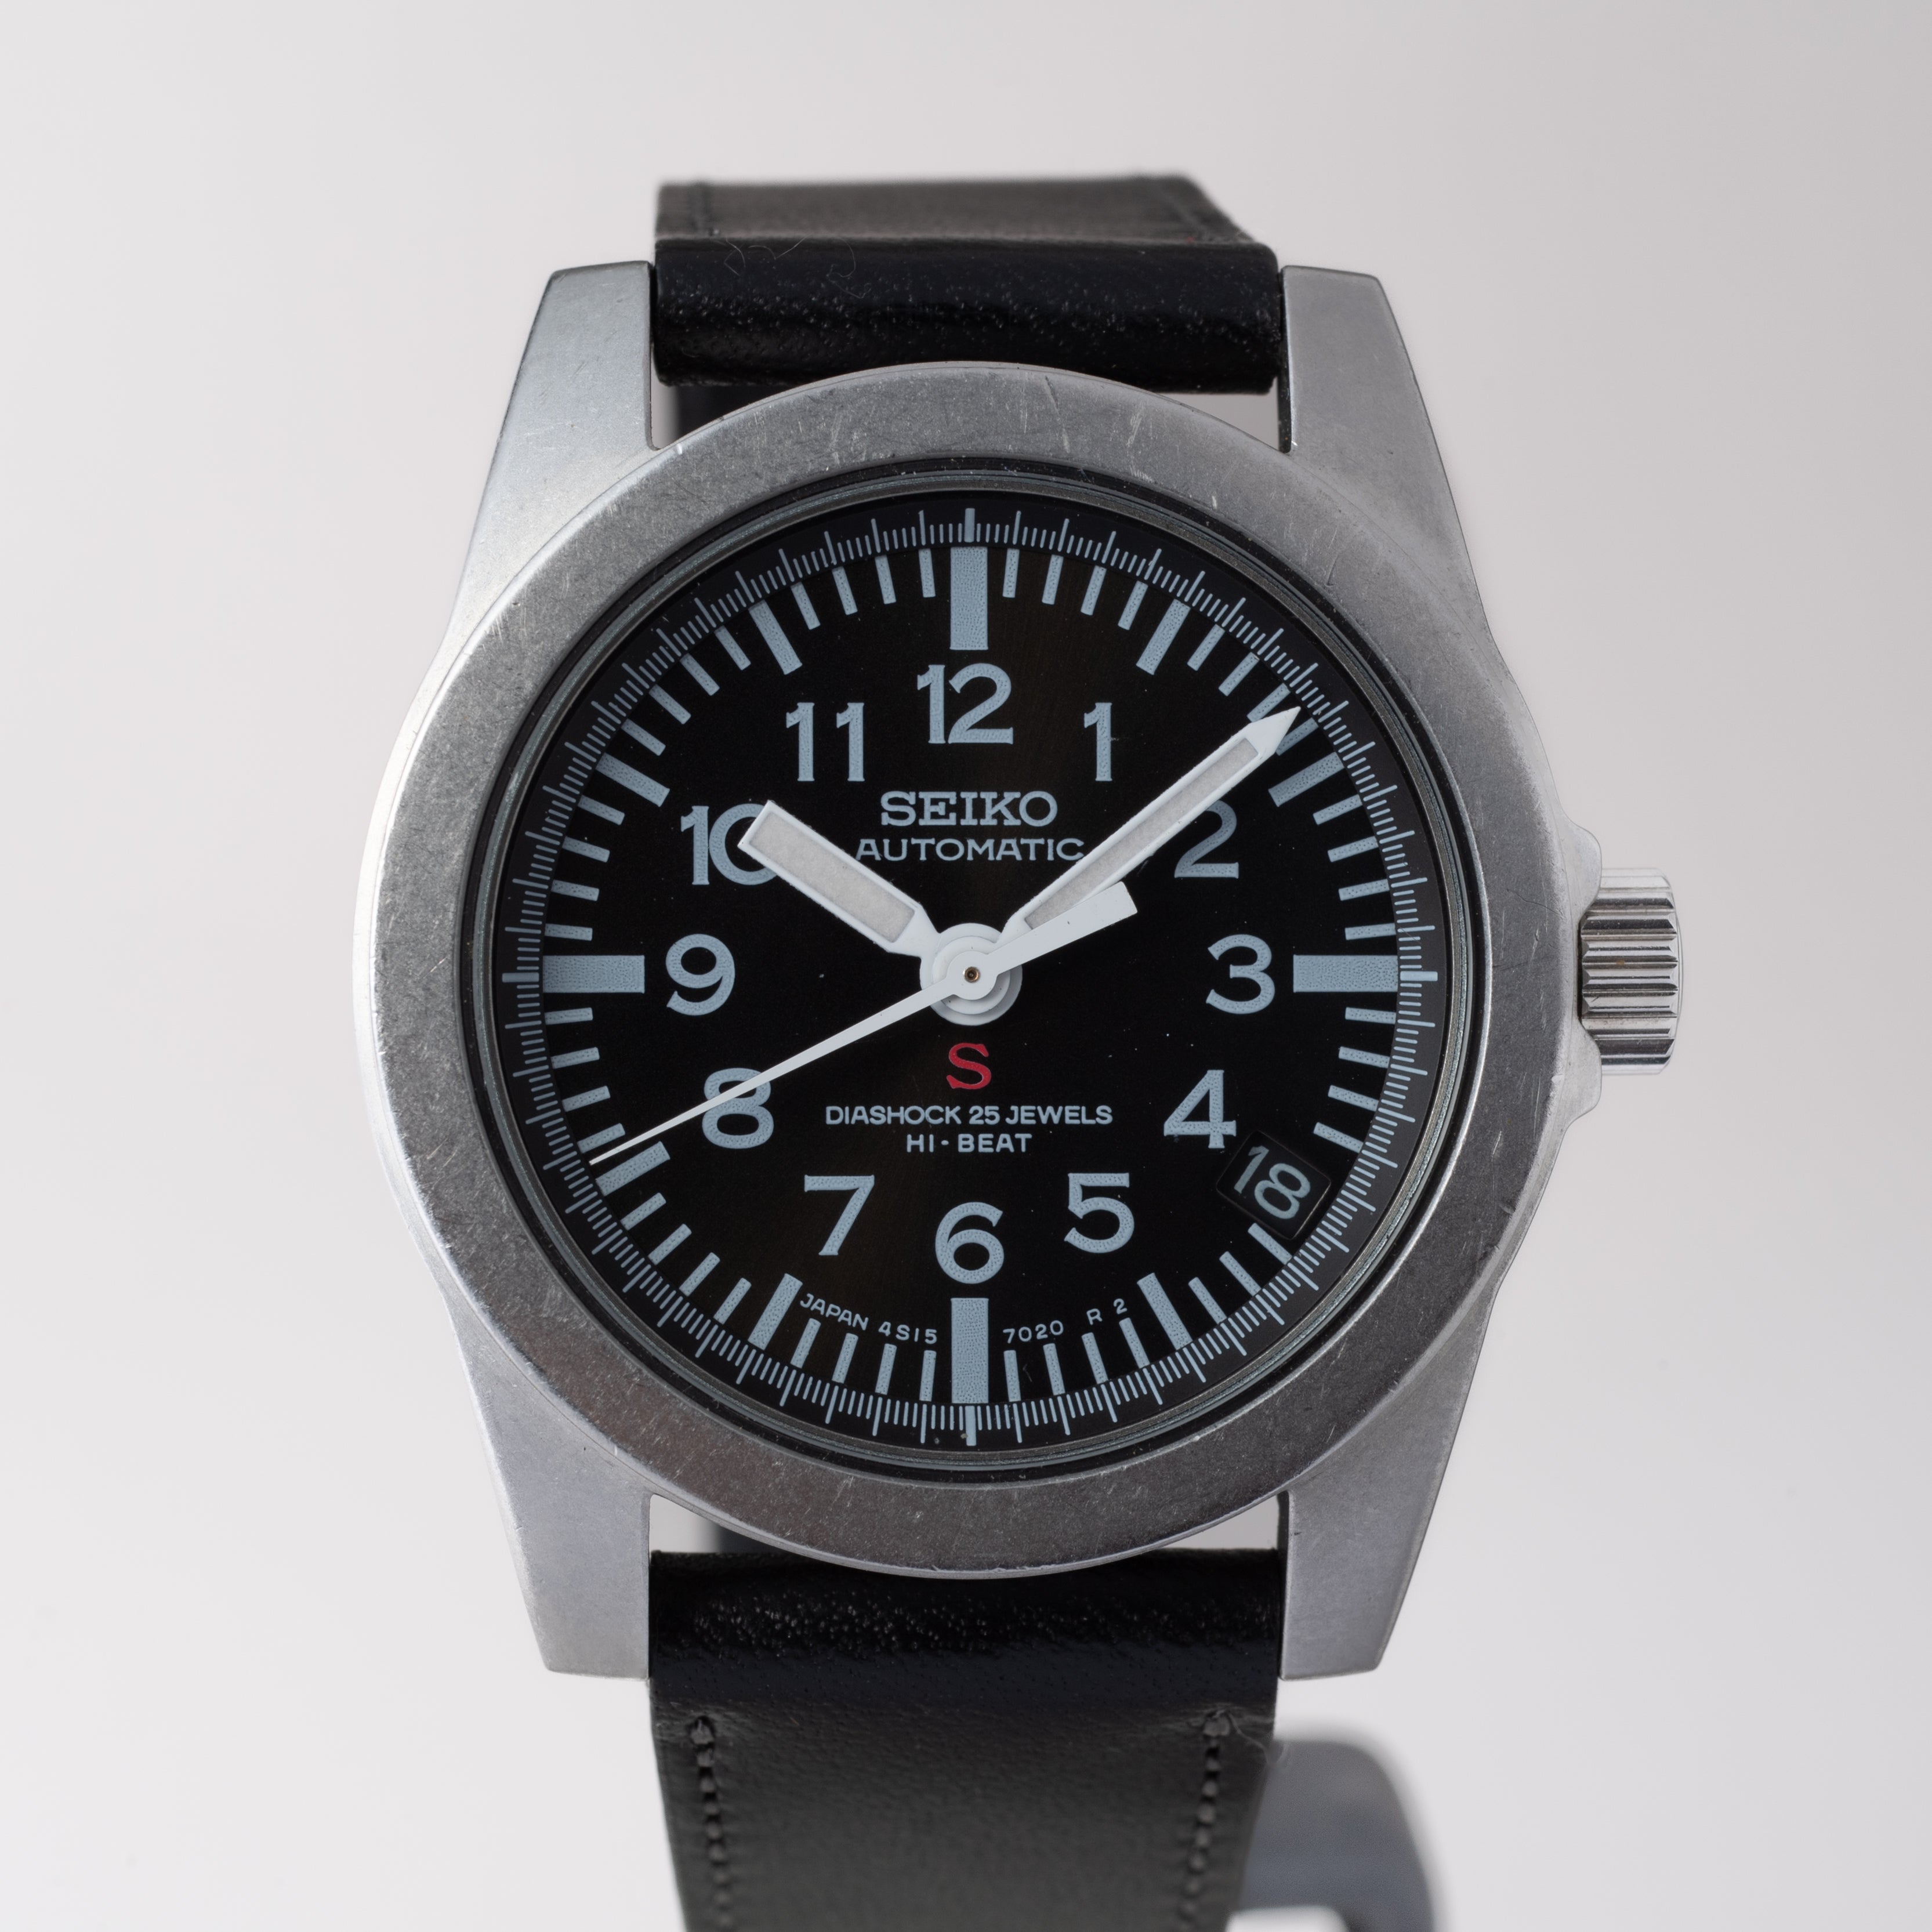 SEIKO 赤SUS 4S15-7020 - 腕時計(アナログ)